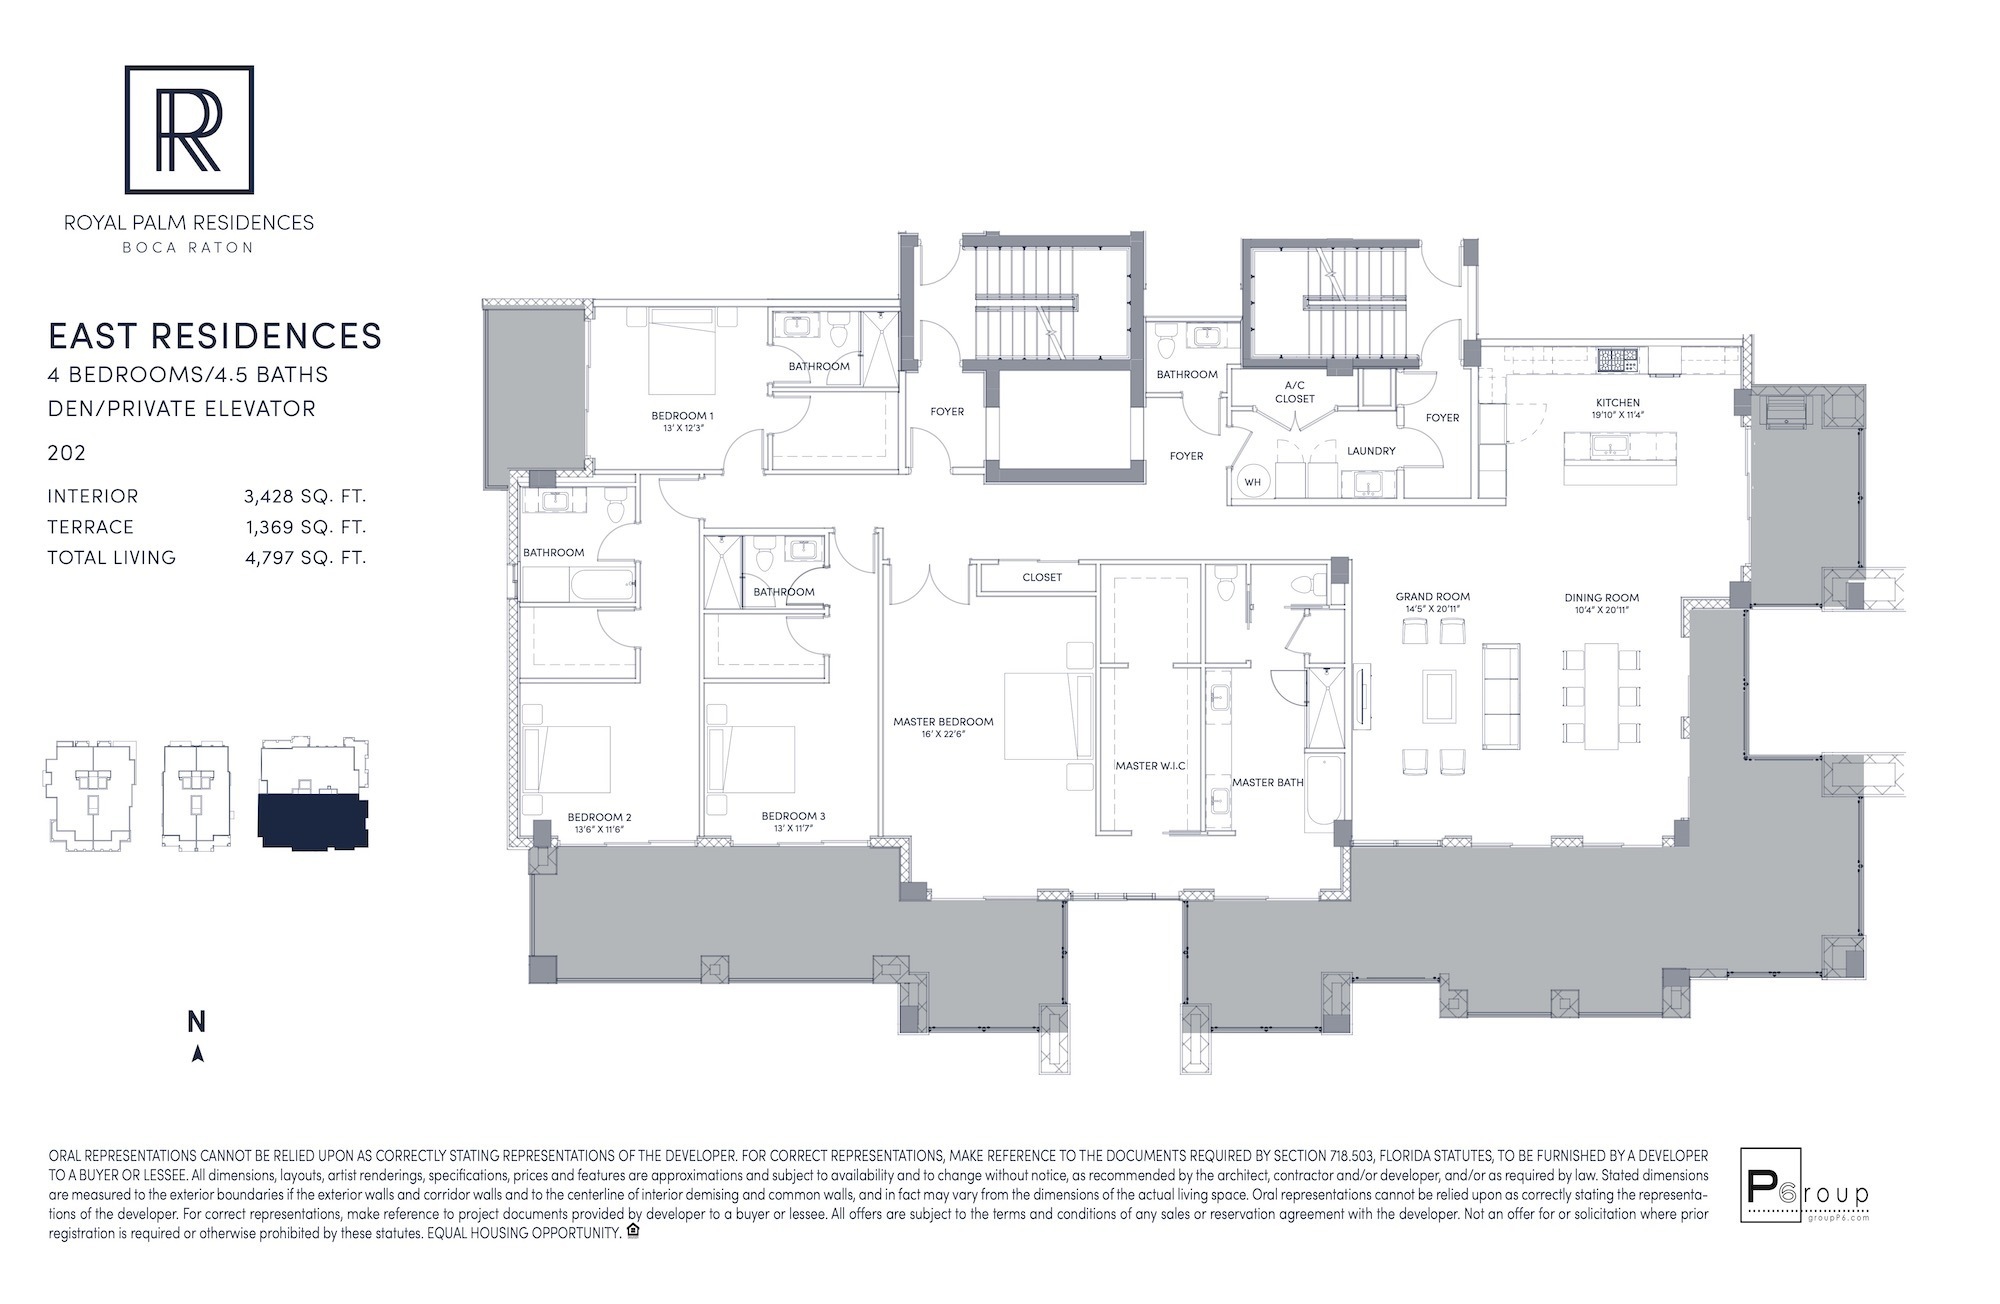 Floor Plan for Royal Palm Residences Floorplans, East Residences 202